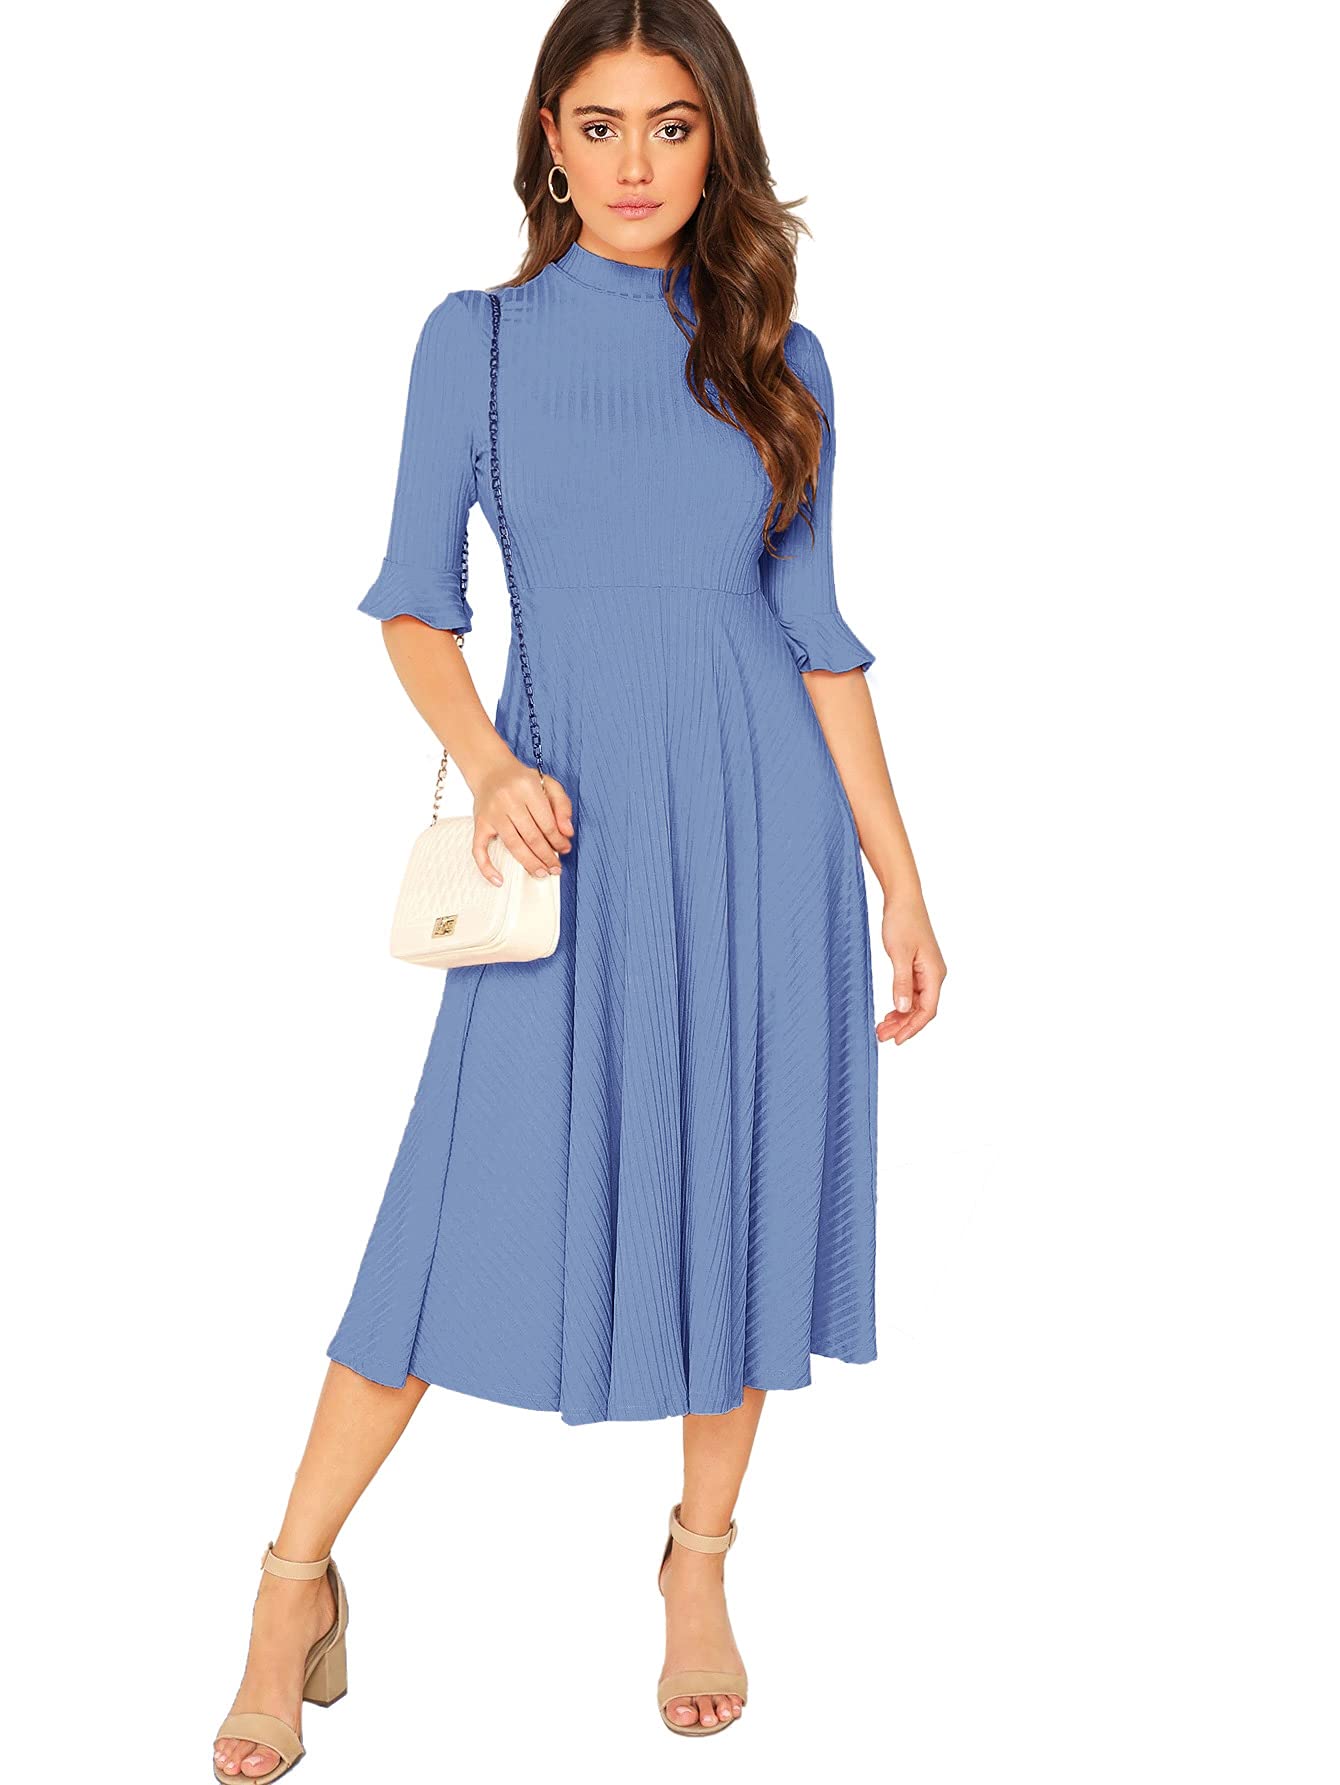 Verdusa Women's Elegant Ribbed Knit Bell Sleeve Fit and Flare Midi Dress Slate Blue S